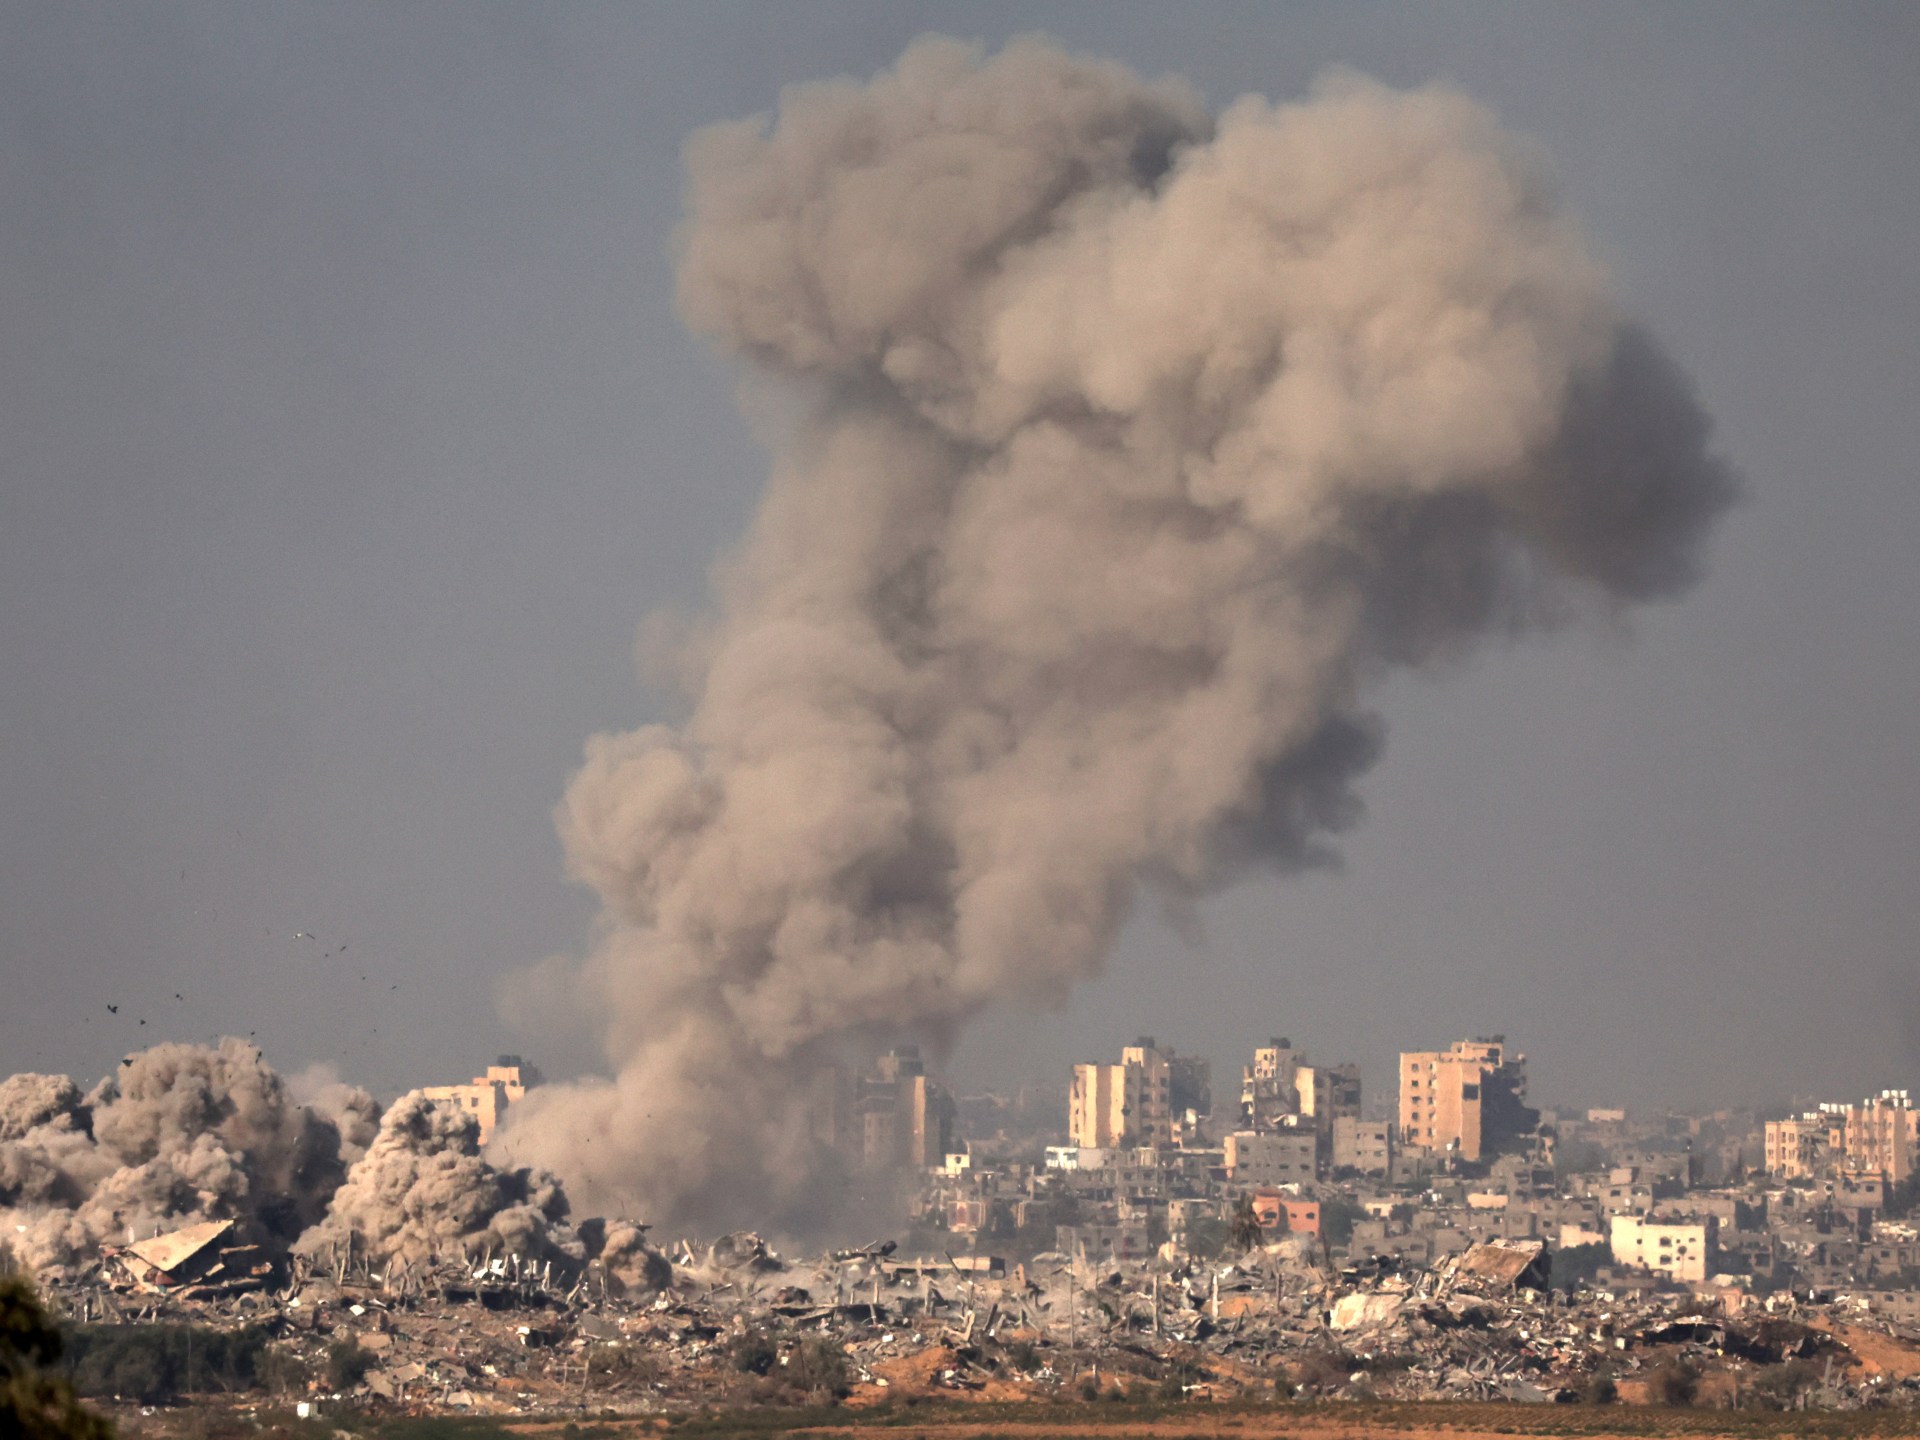 German civil servants demand ‘immediate’ end to Israeli arms supplies | Israel War on Gaza News